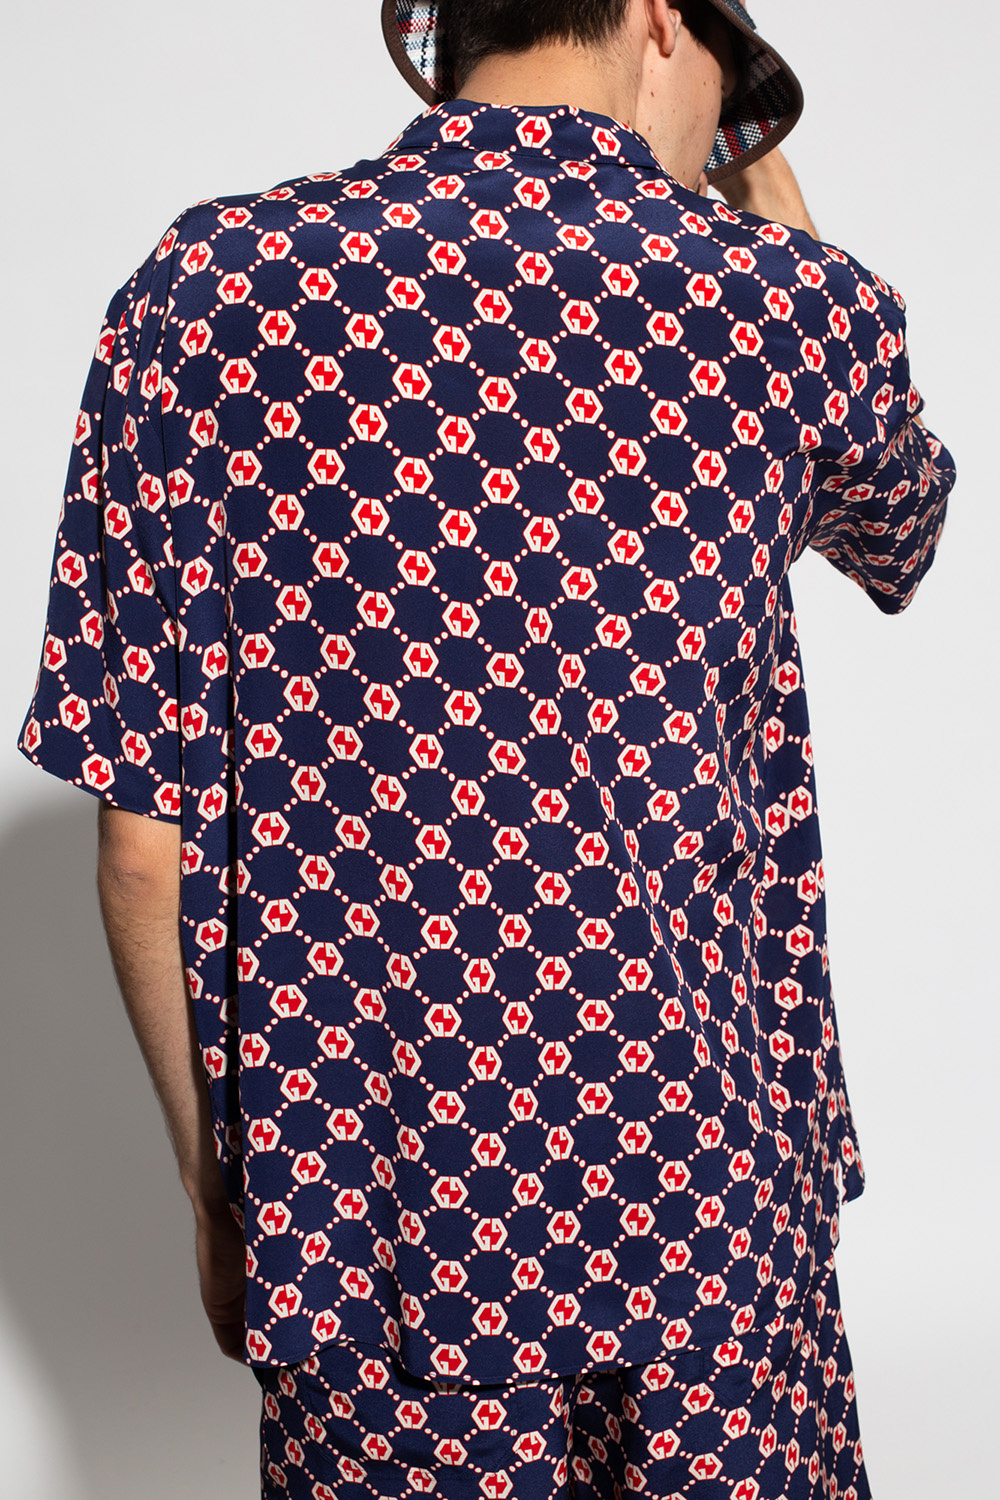 Gucci Silk shirt with logo, Men's Clothing